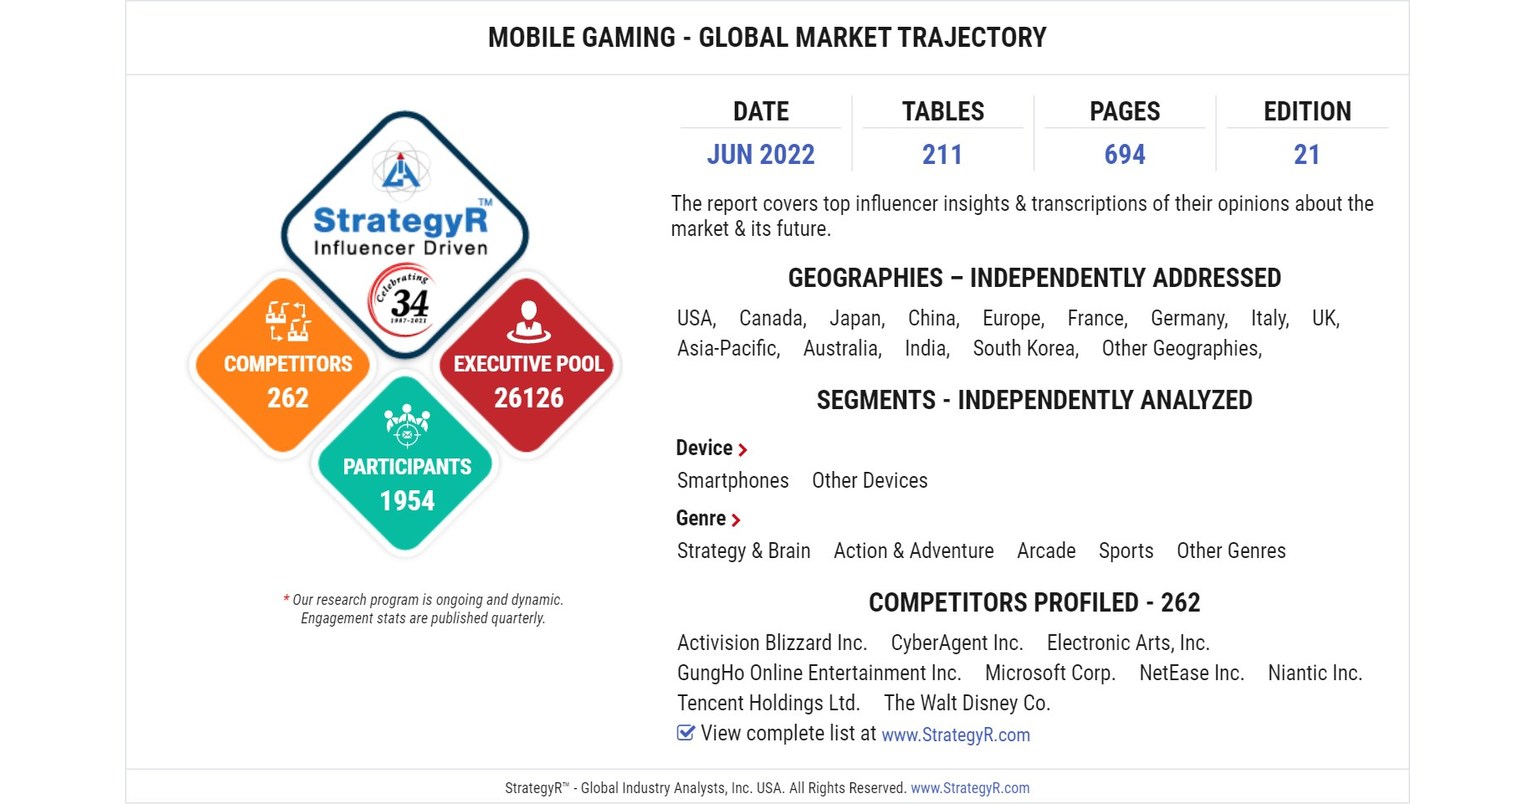 Mobile games dominate 2022 with $92.2 billion market value